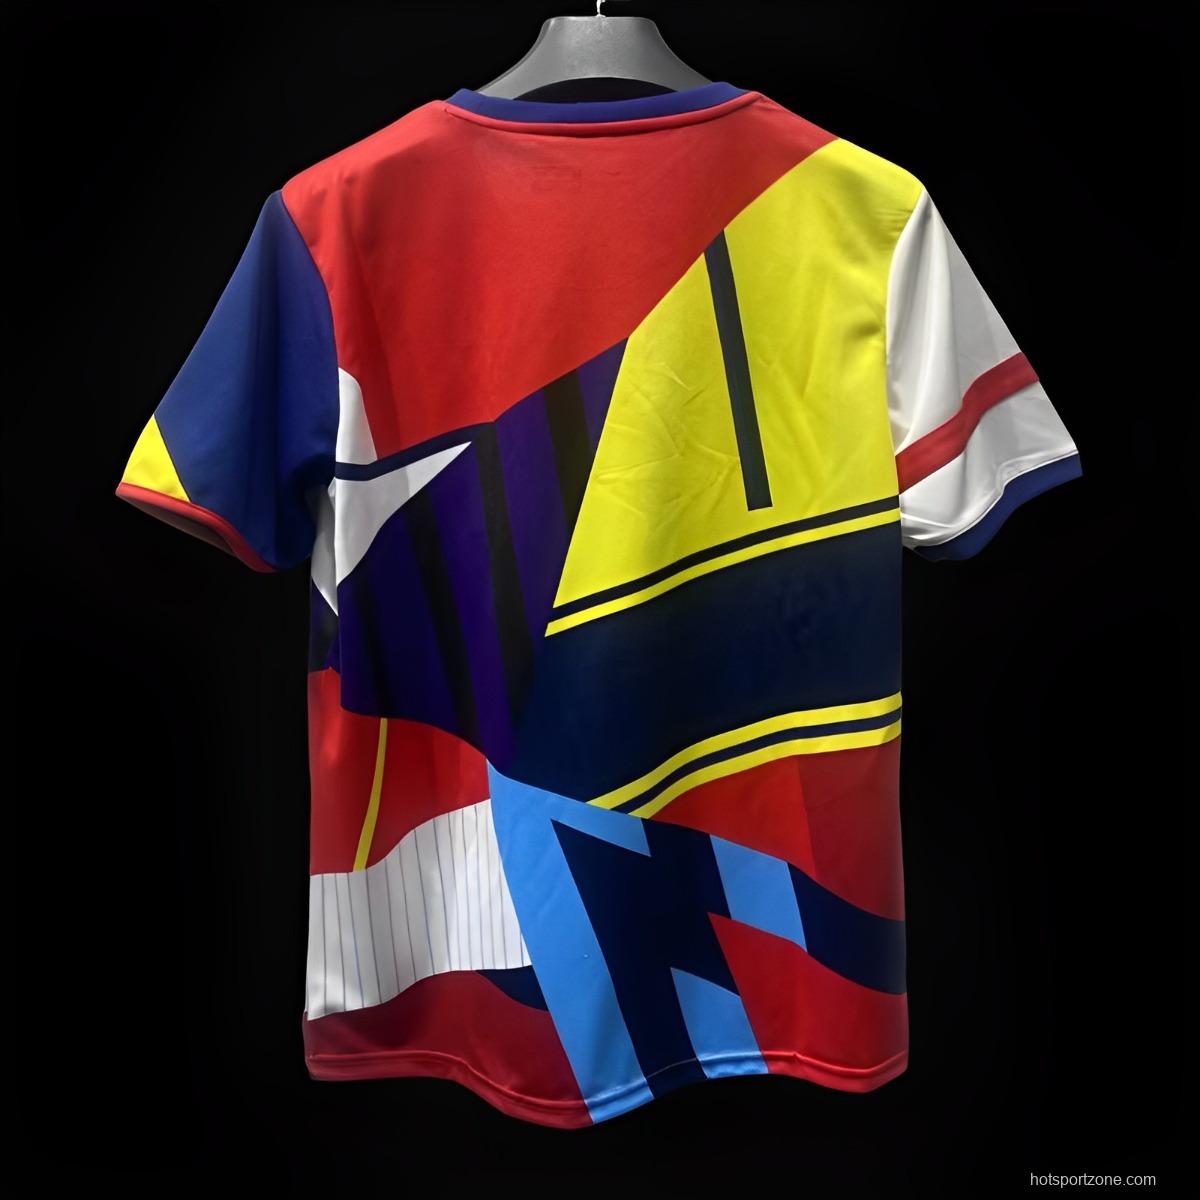 Retro 13/14 Arsenal FA Cup Multi Colors Limited Edition Jersey